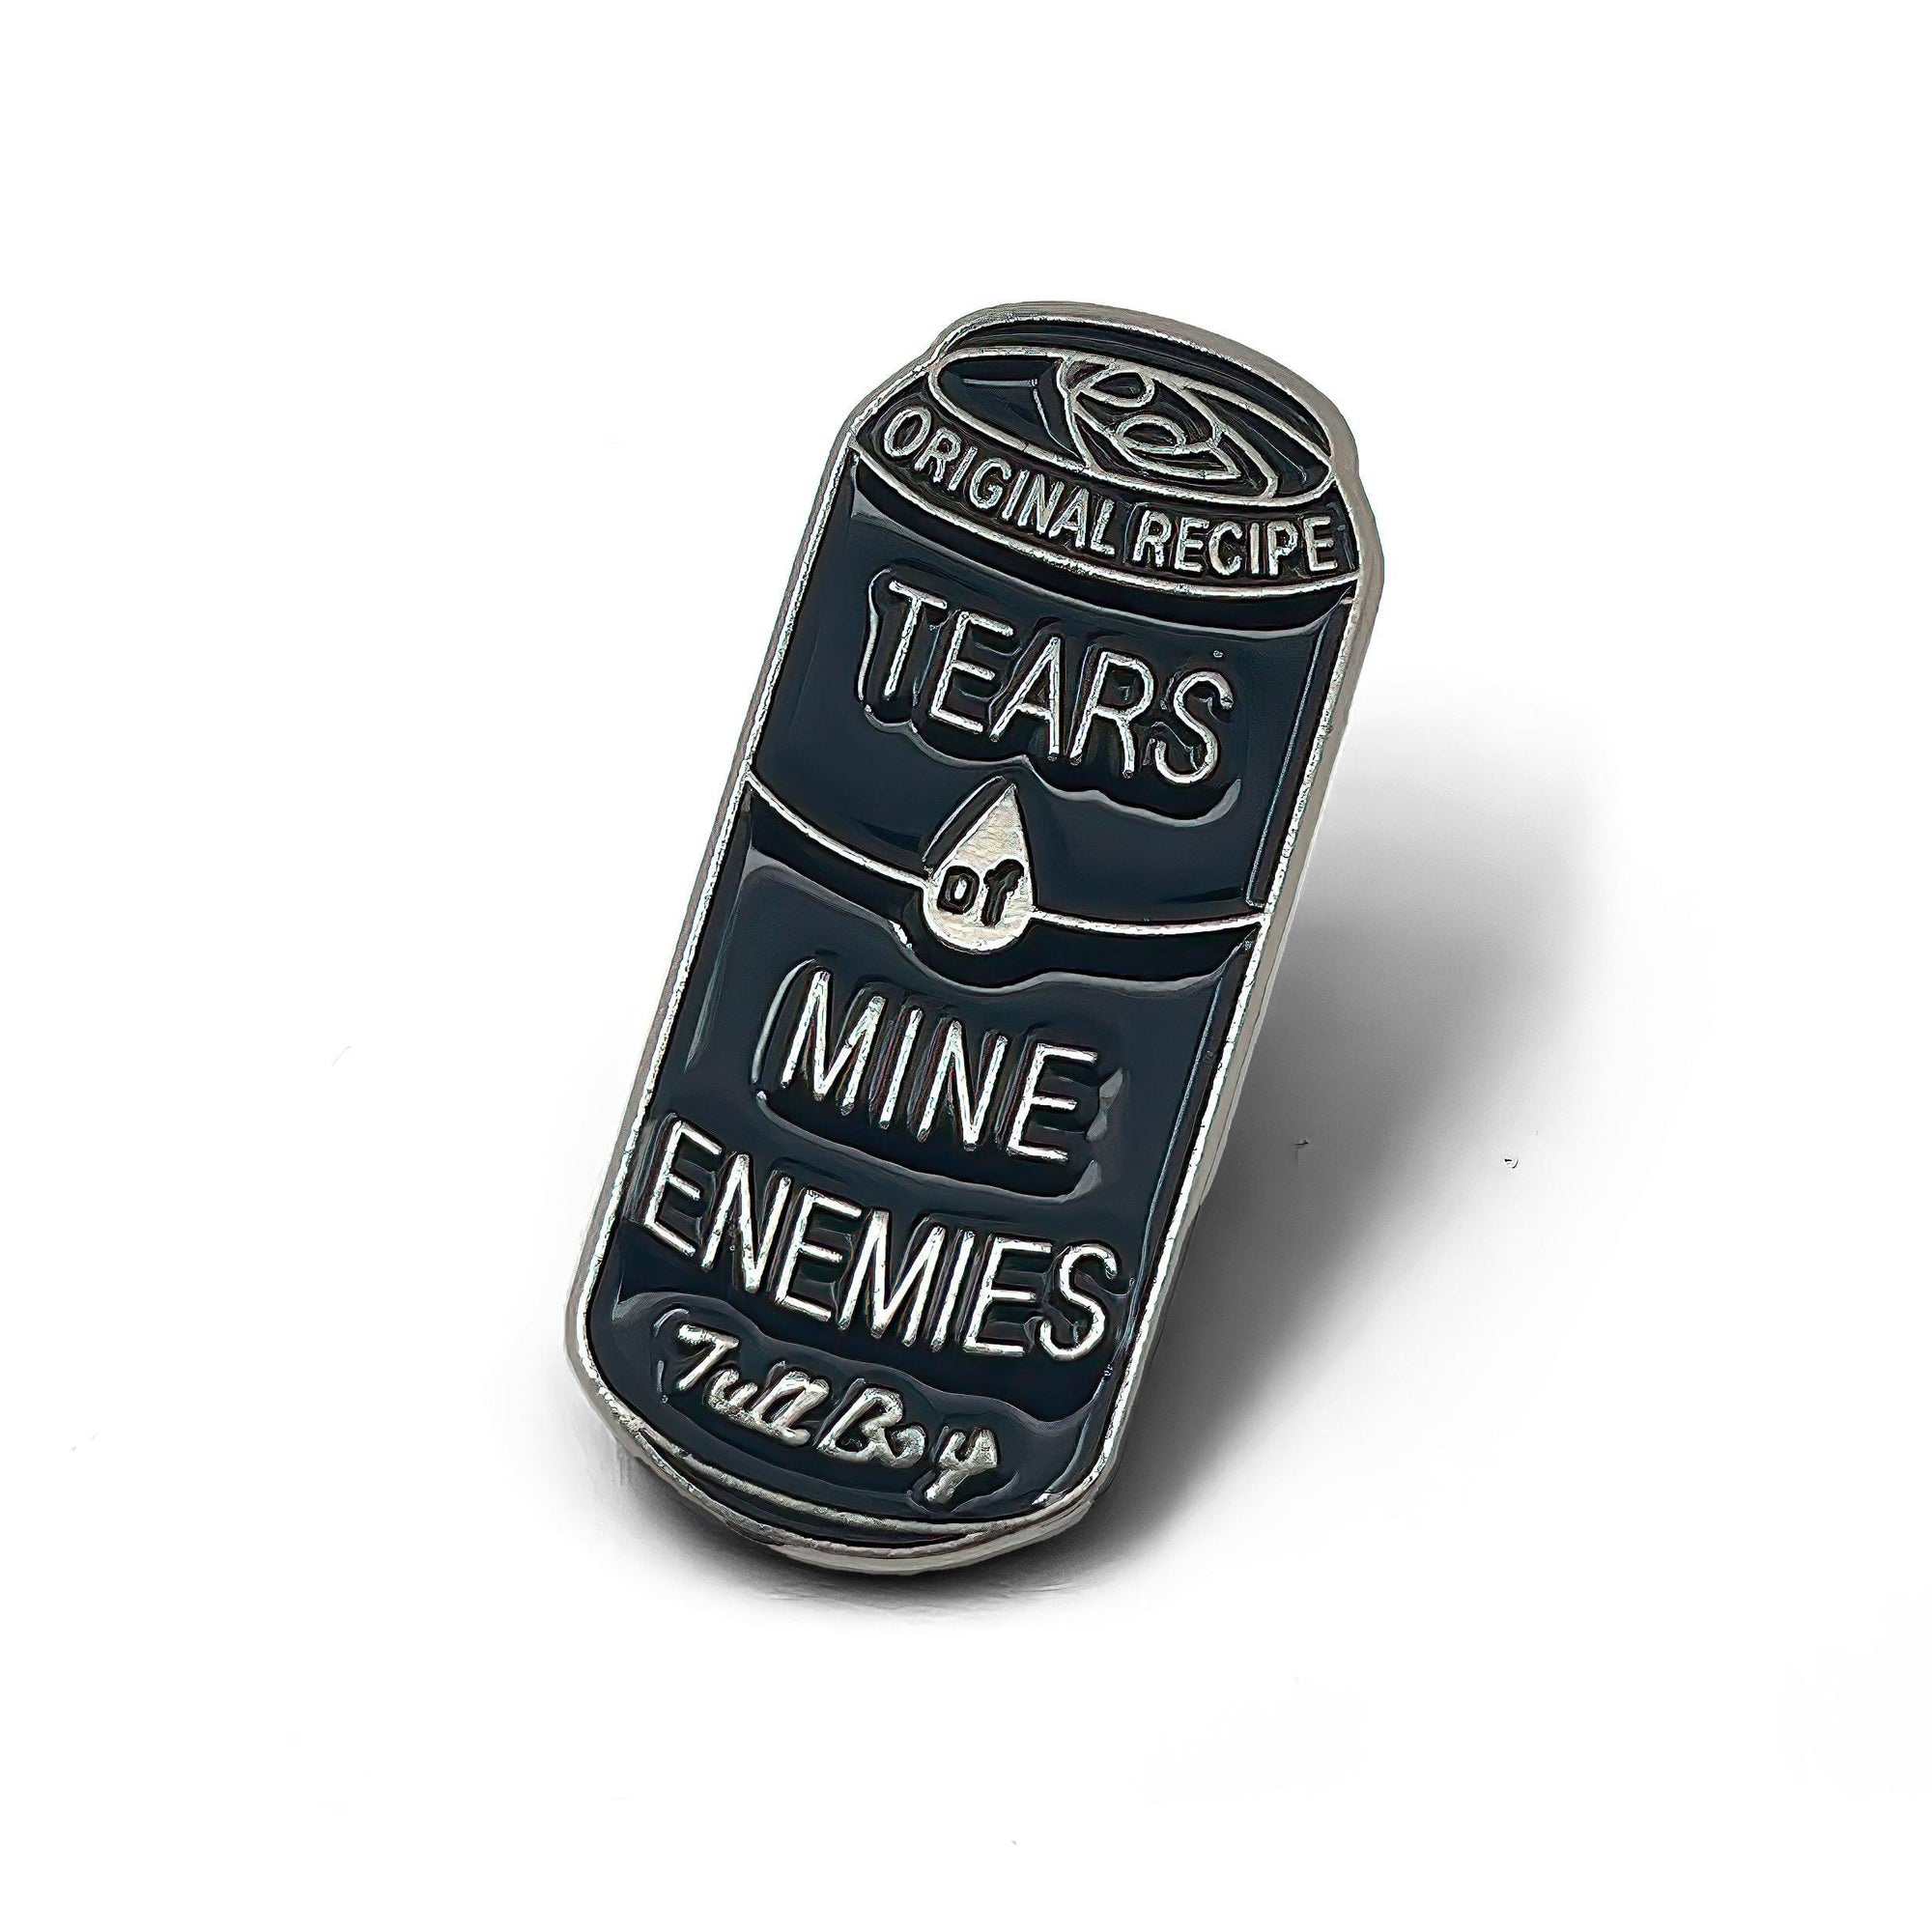 Tears of Mine Enemies - No System